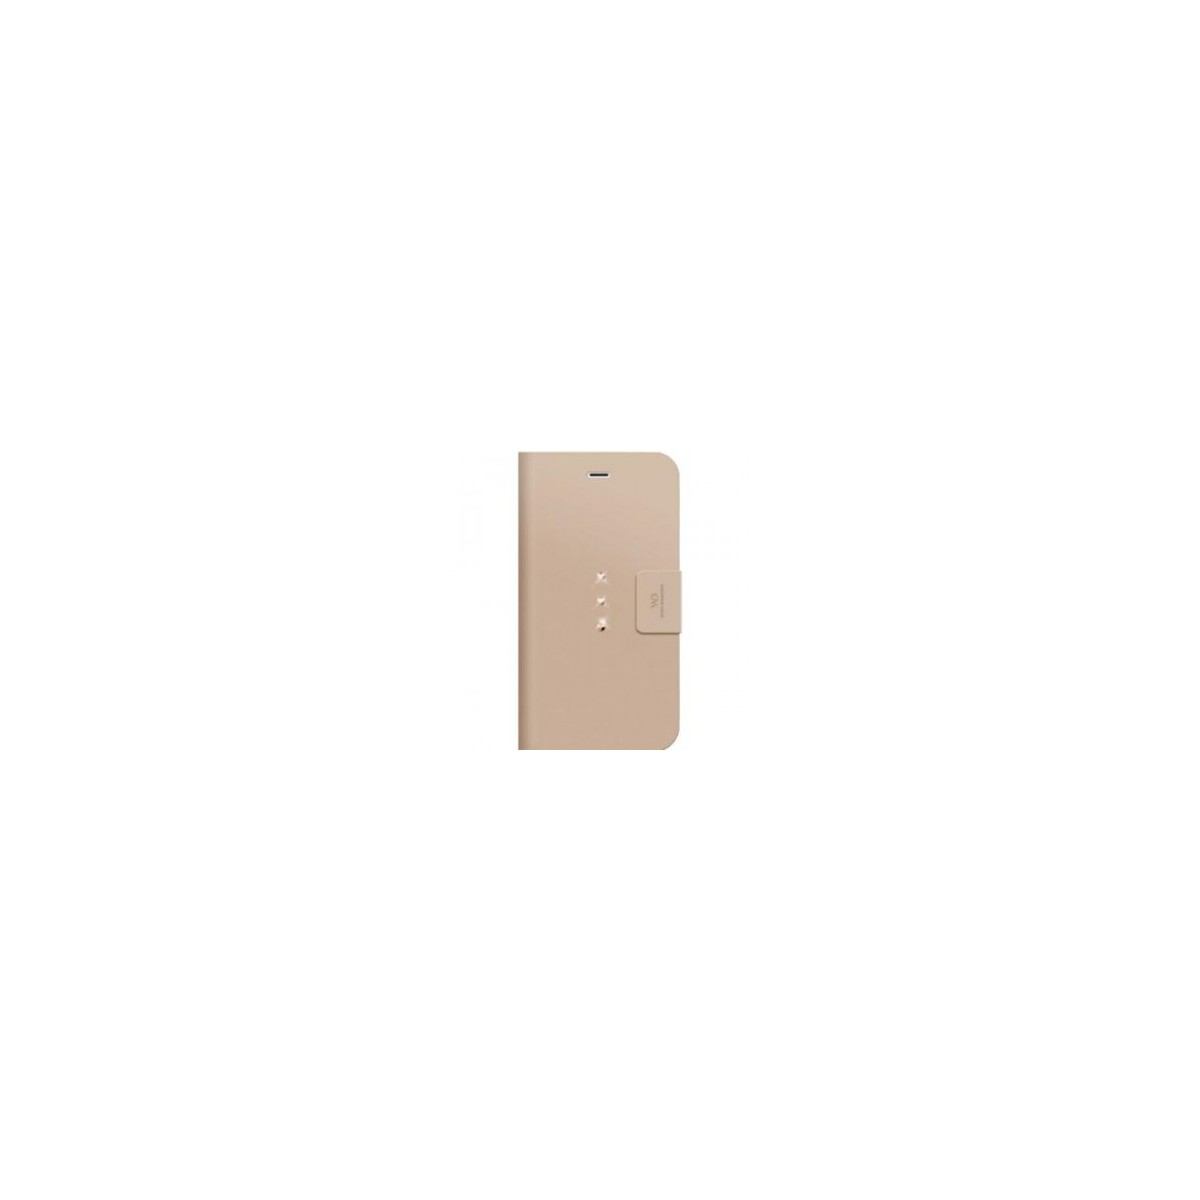 Etui universel pour smartphone jusqu'à 4.6" porte-cartes rose gold avec crystal - White Diamonds